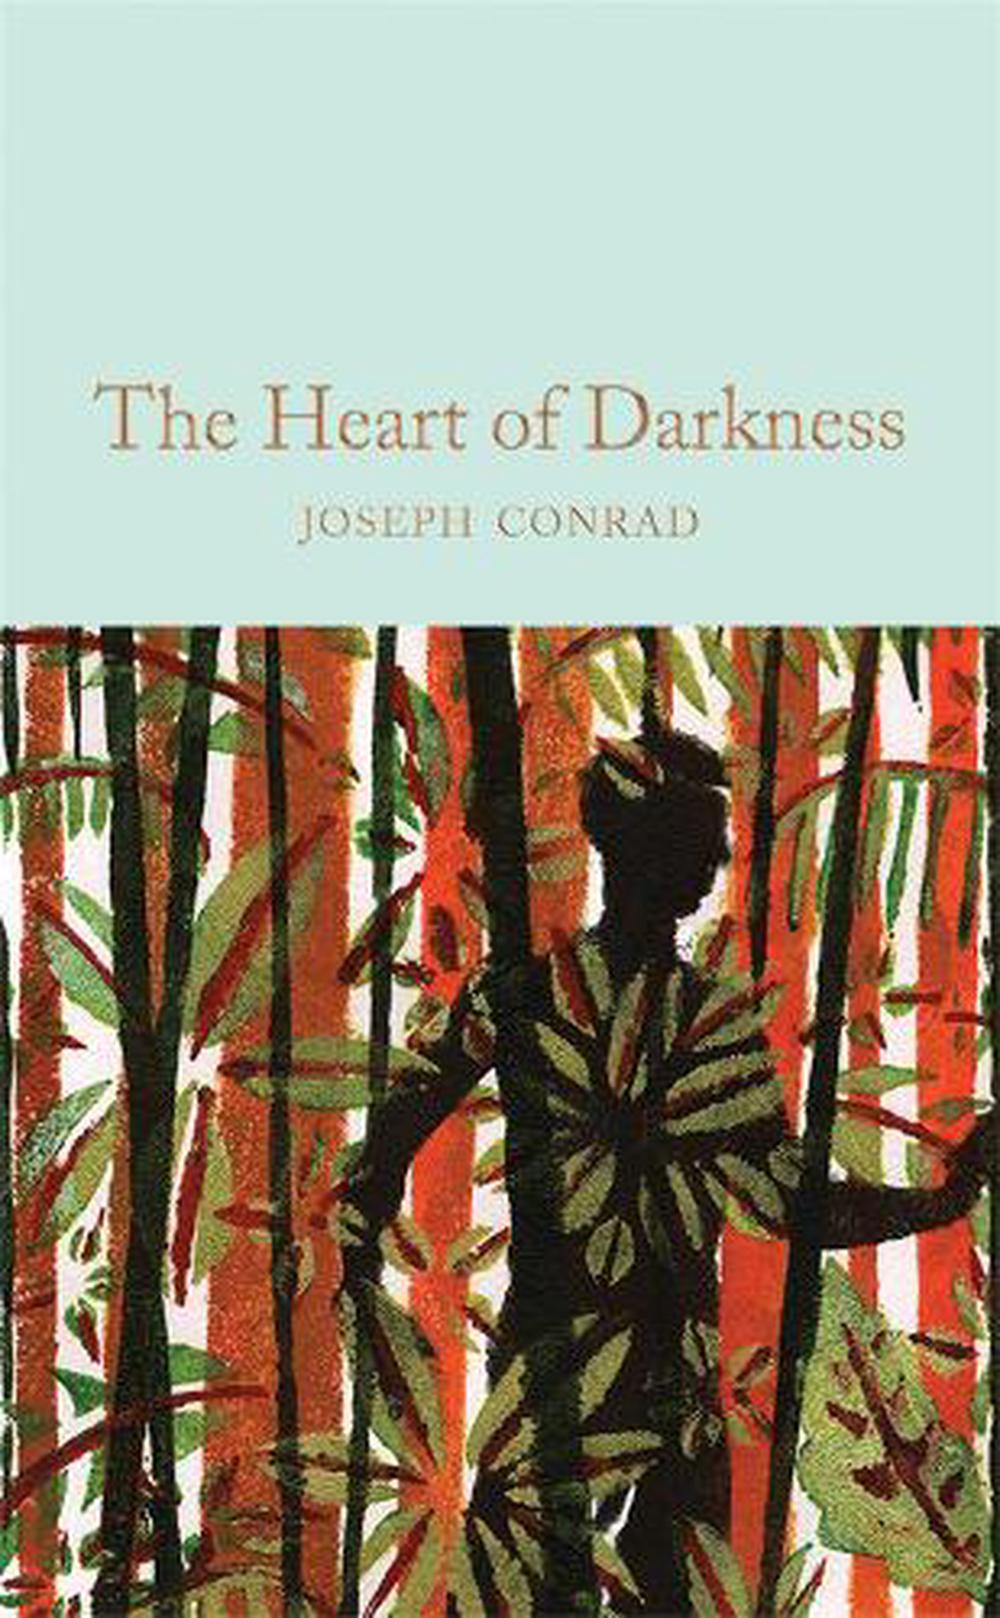 conrad heart of darkness